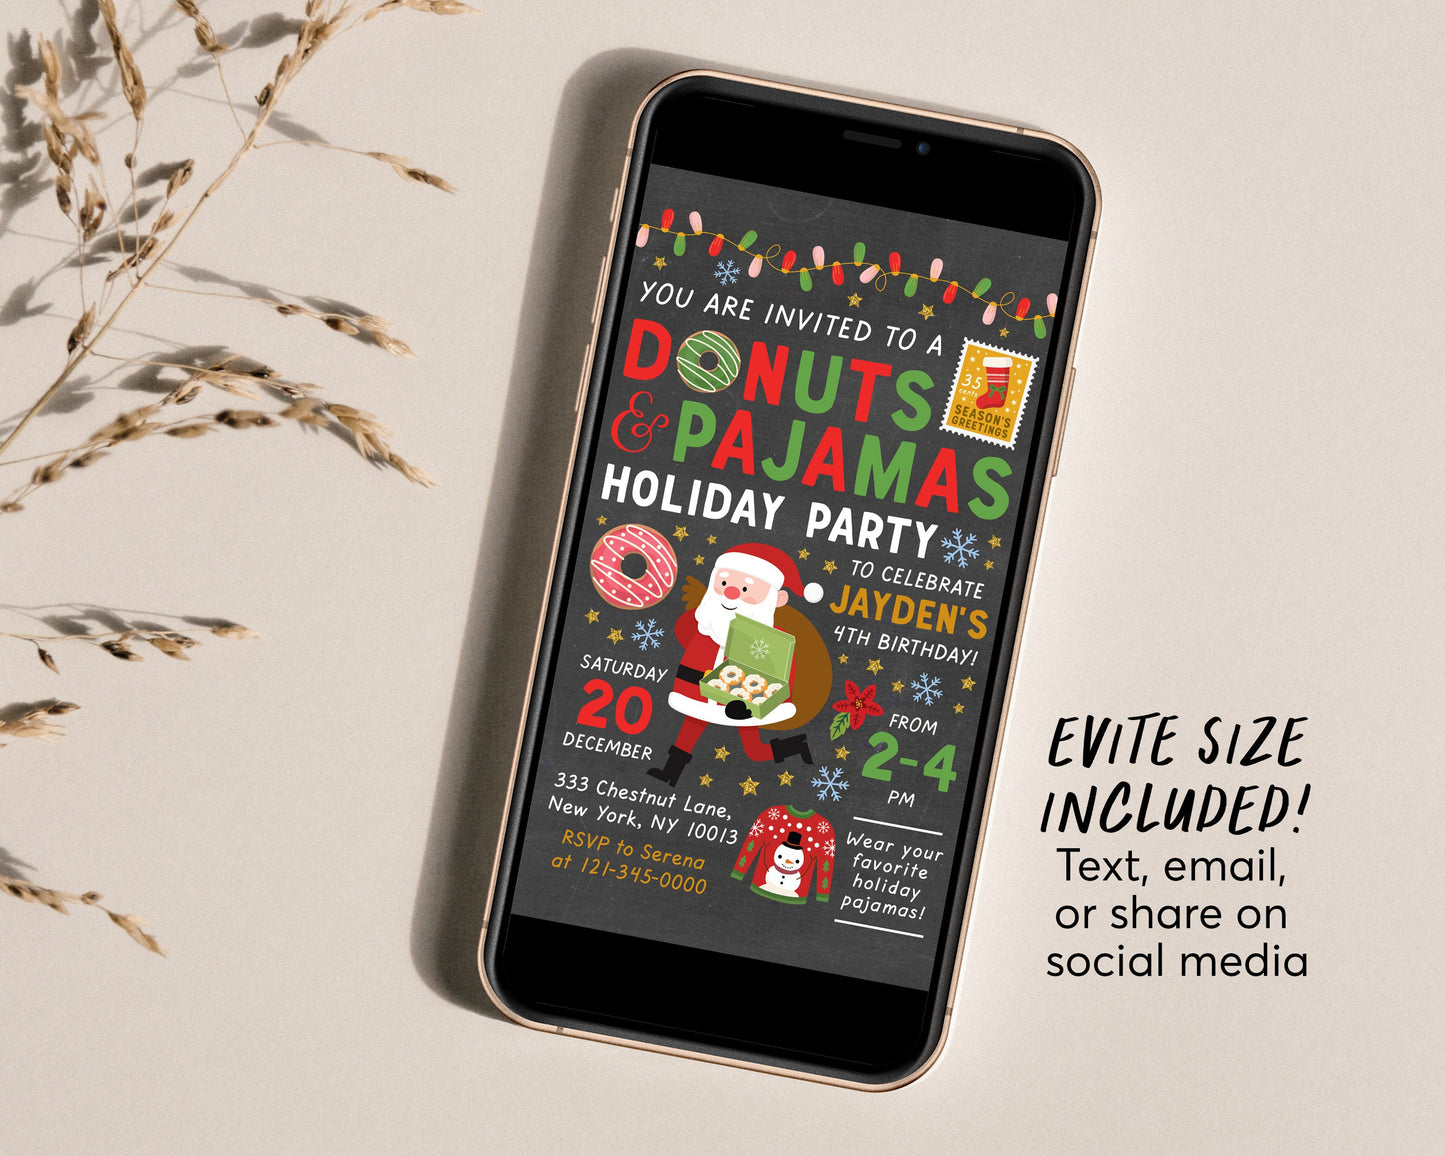 Donuts and Pajamas Party Invitation Editable Template, Holiday Brunch Birthday Party Invite, Kids PJs Sleepover Party Printable Santa